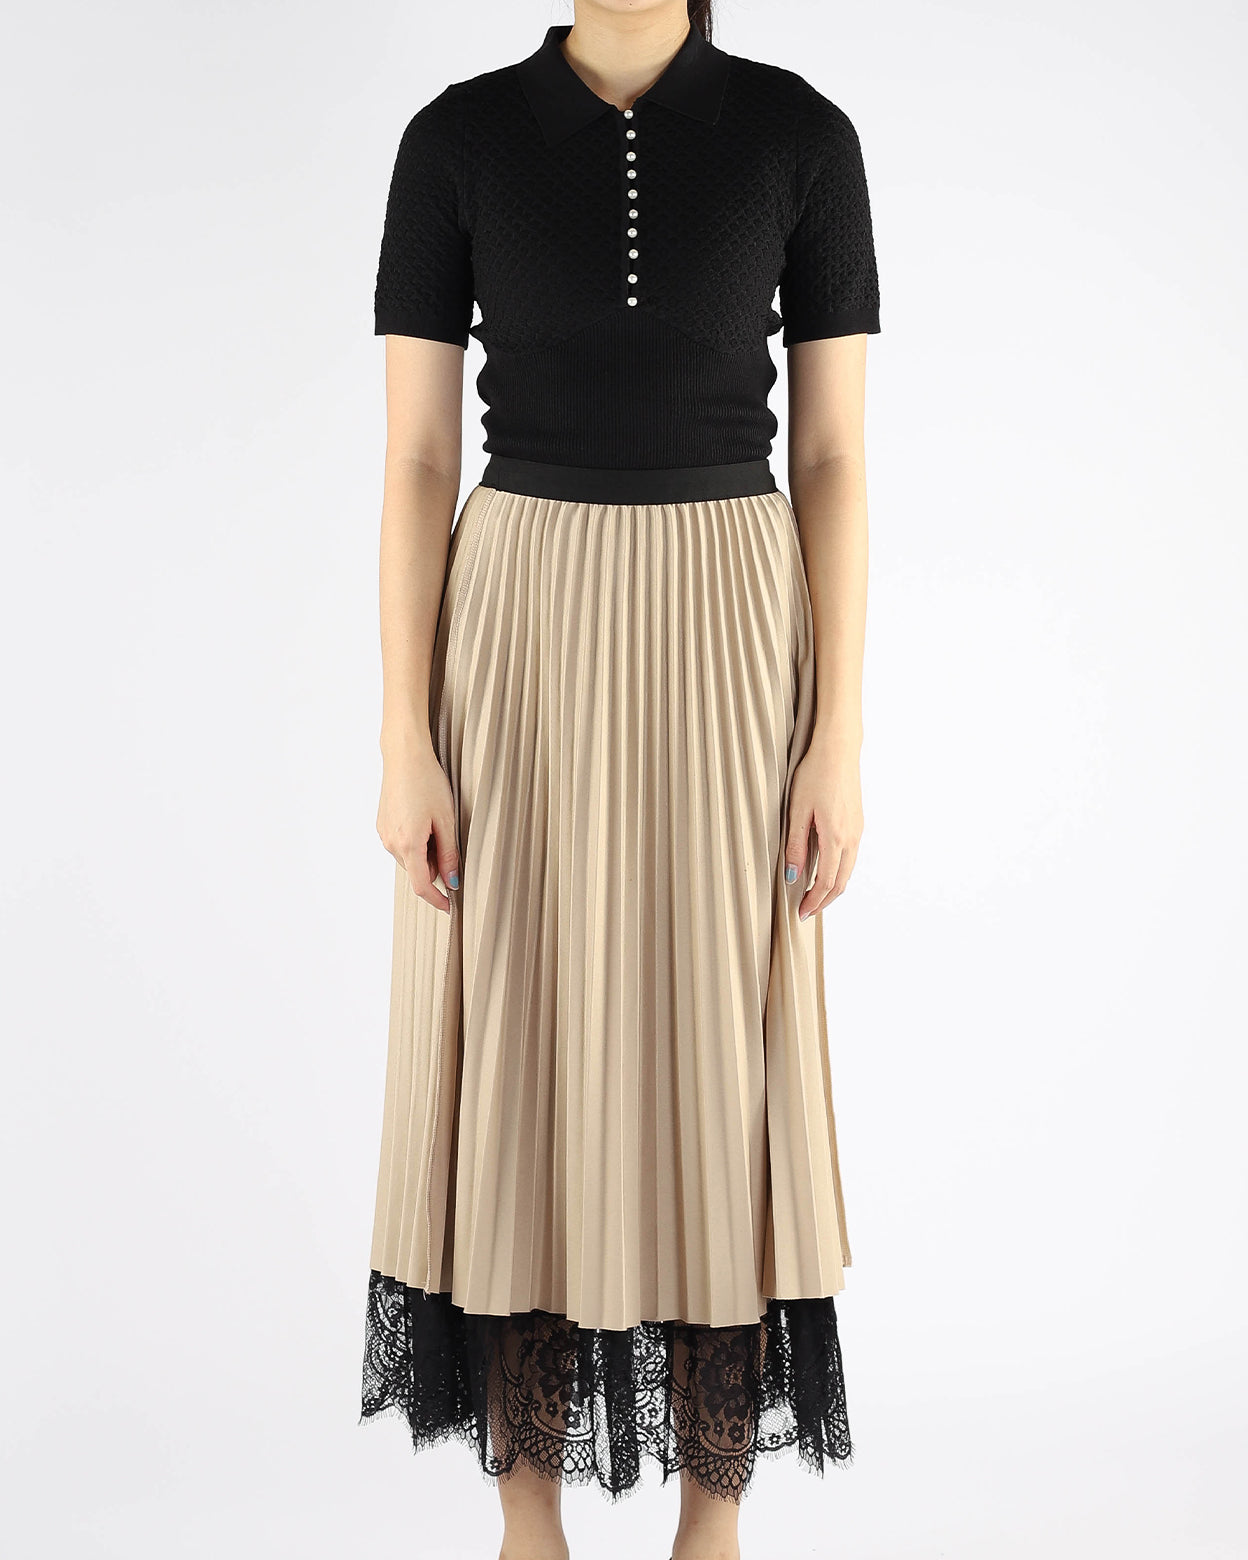 Black Knitted Female Blouse Uniform